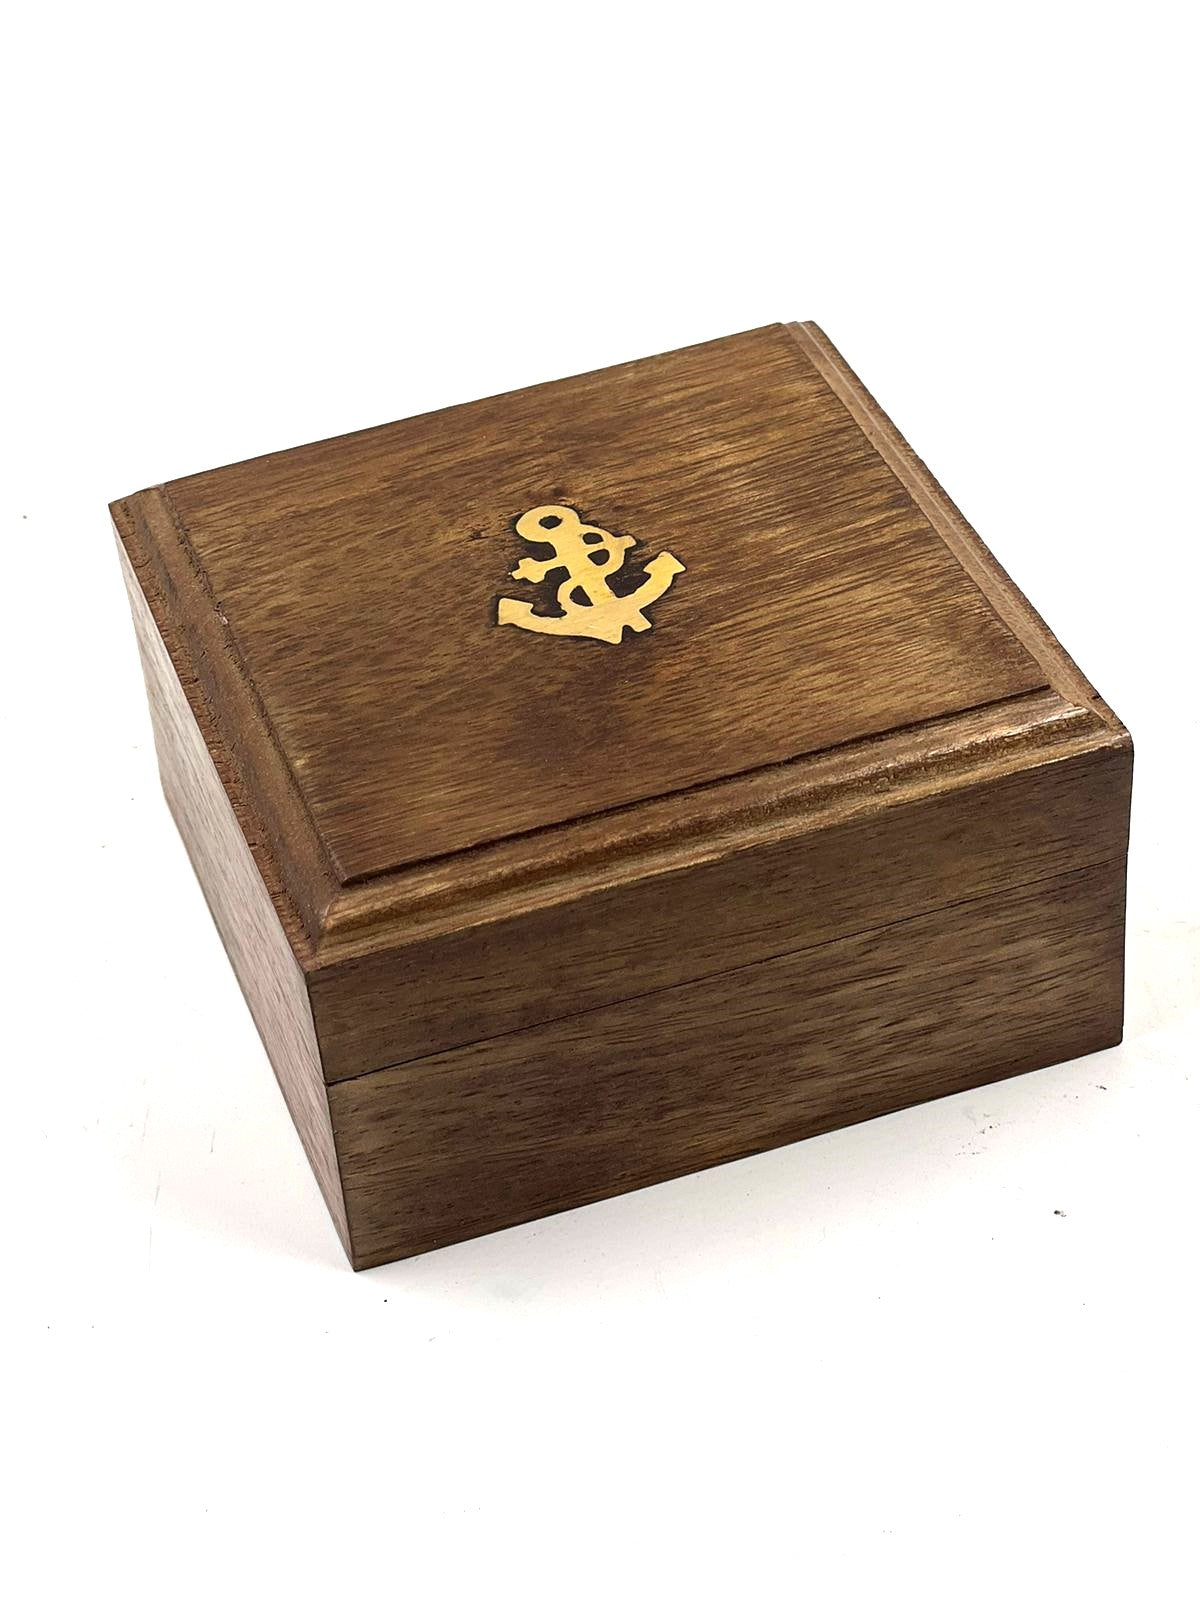 Wooden Box for Kelvin & Hughes Compass - Gift box